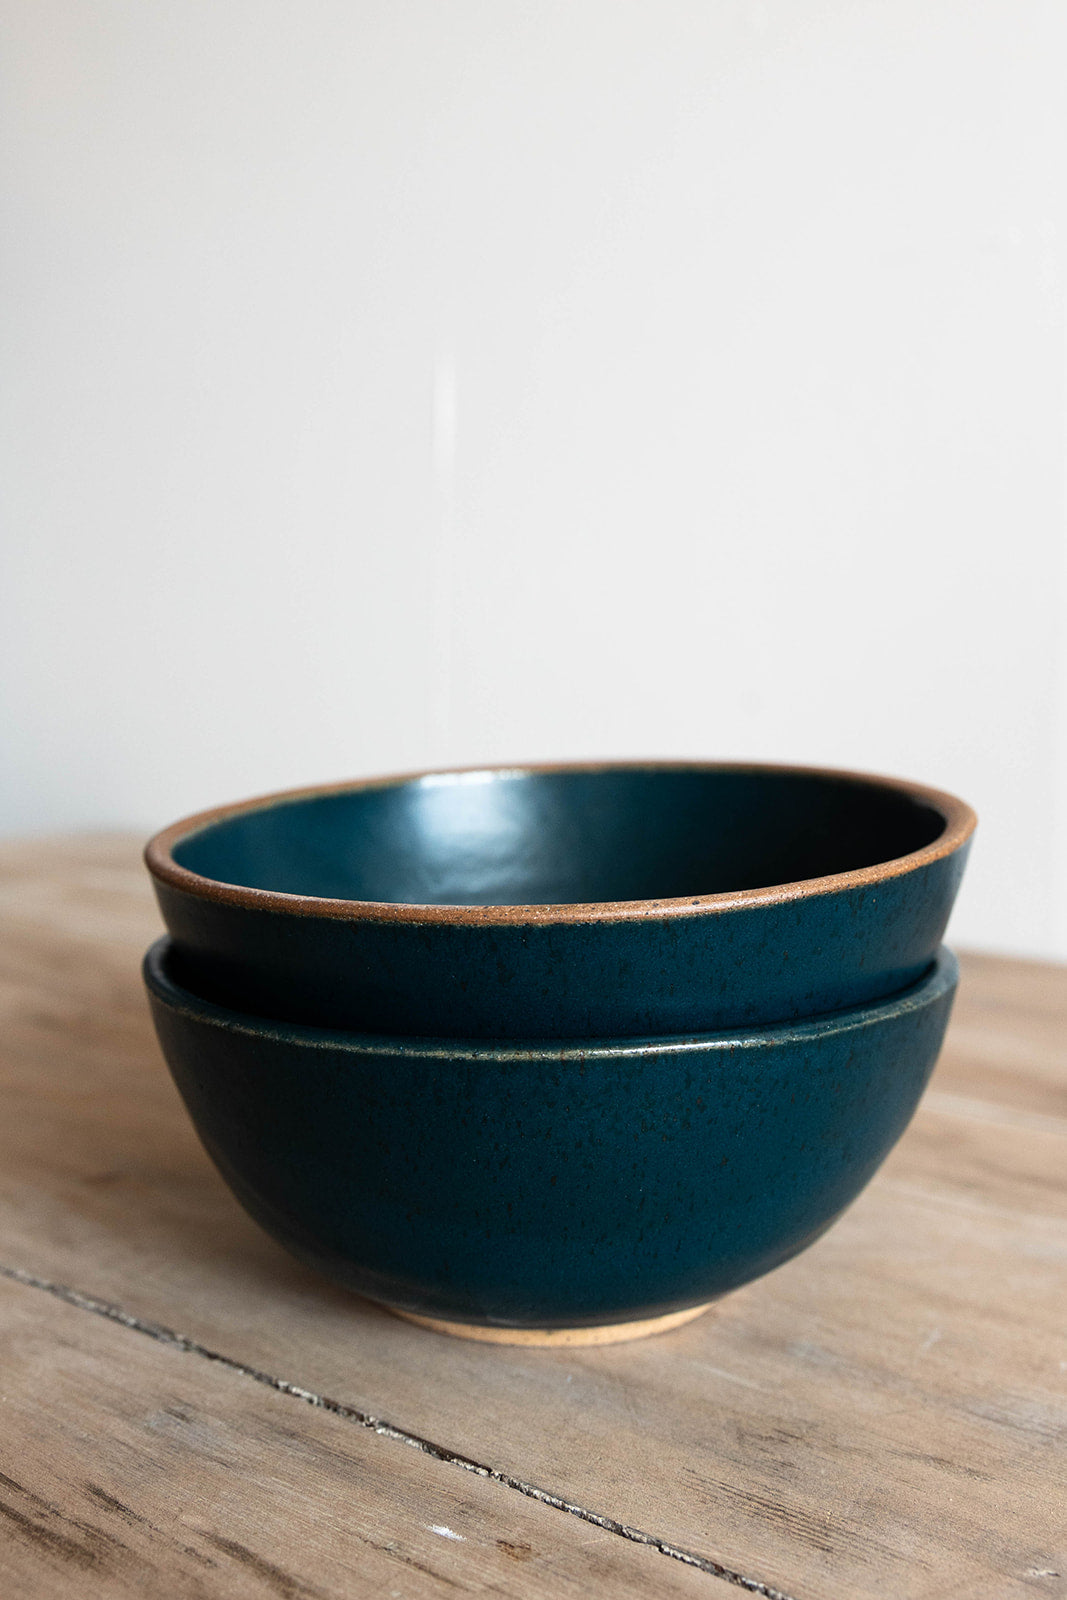 New glaze colors - Ramen bowl